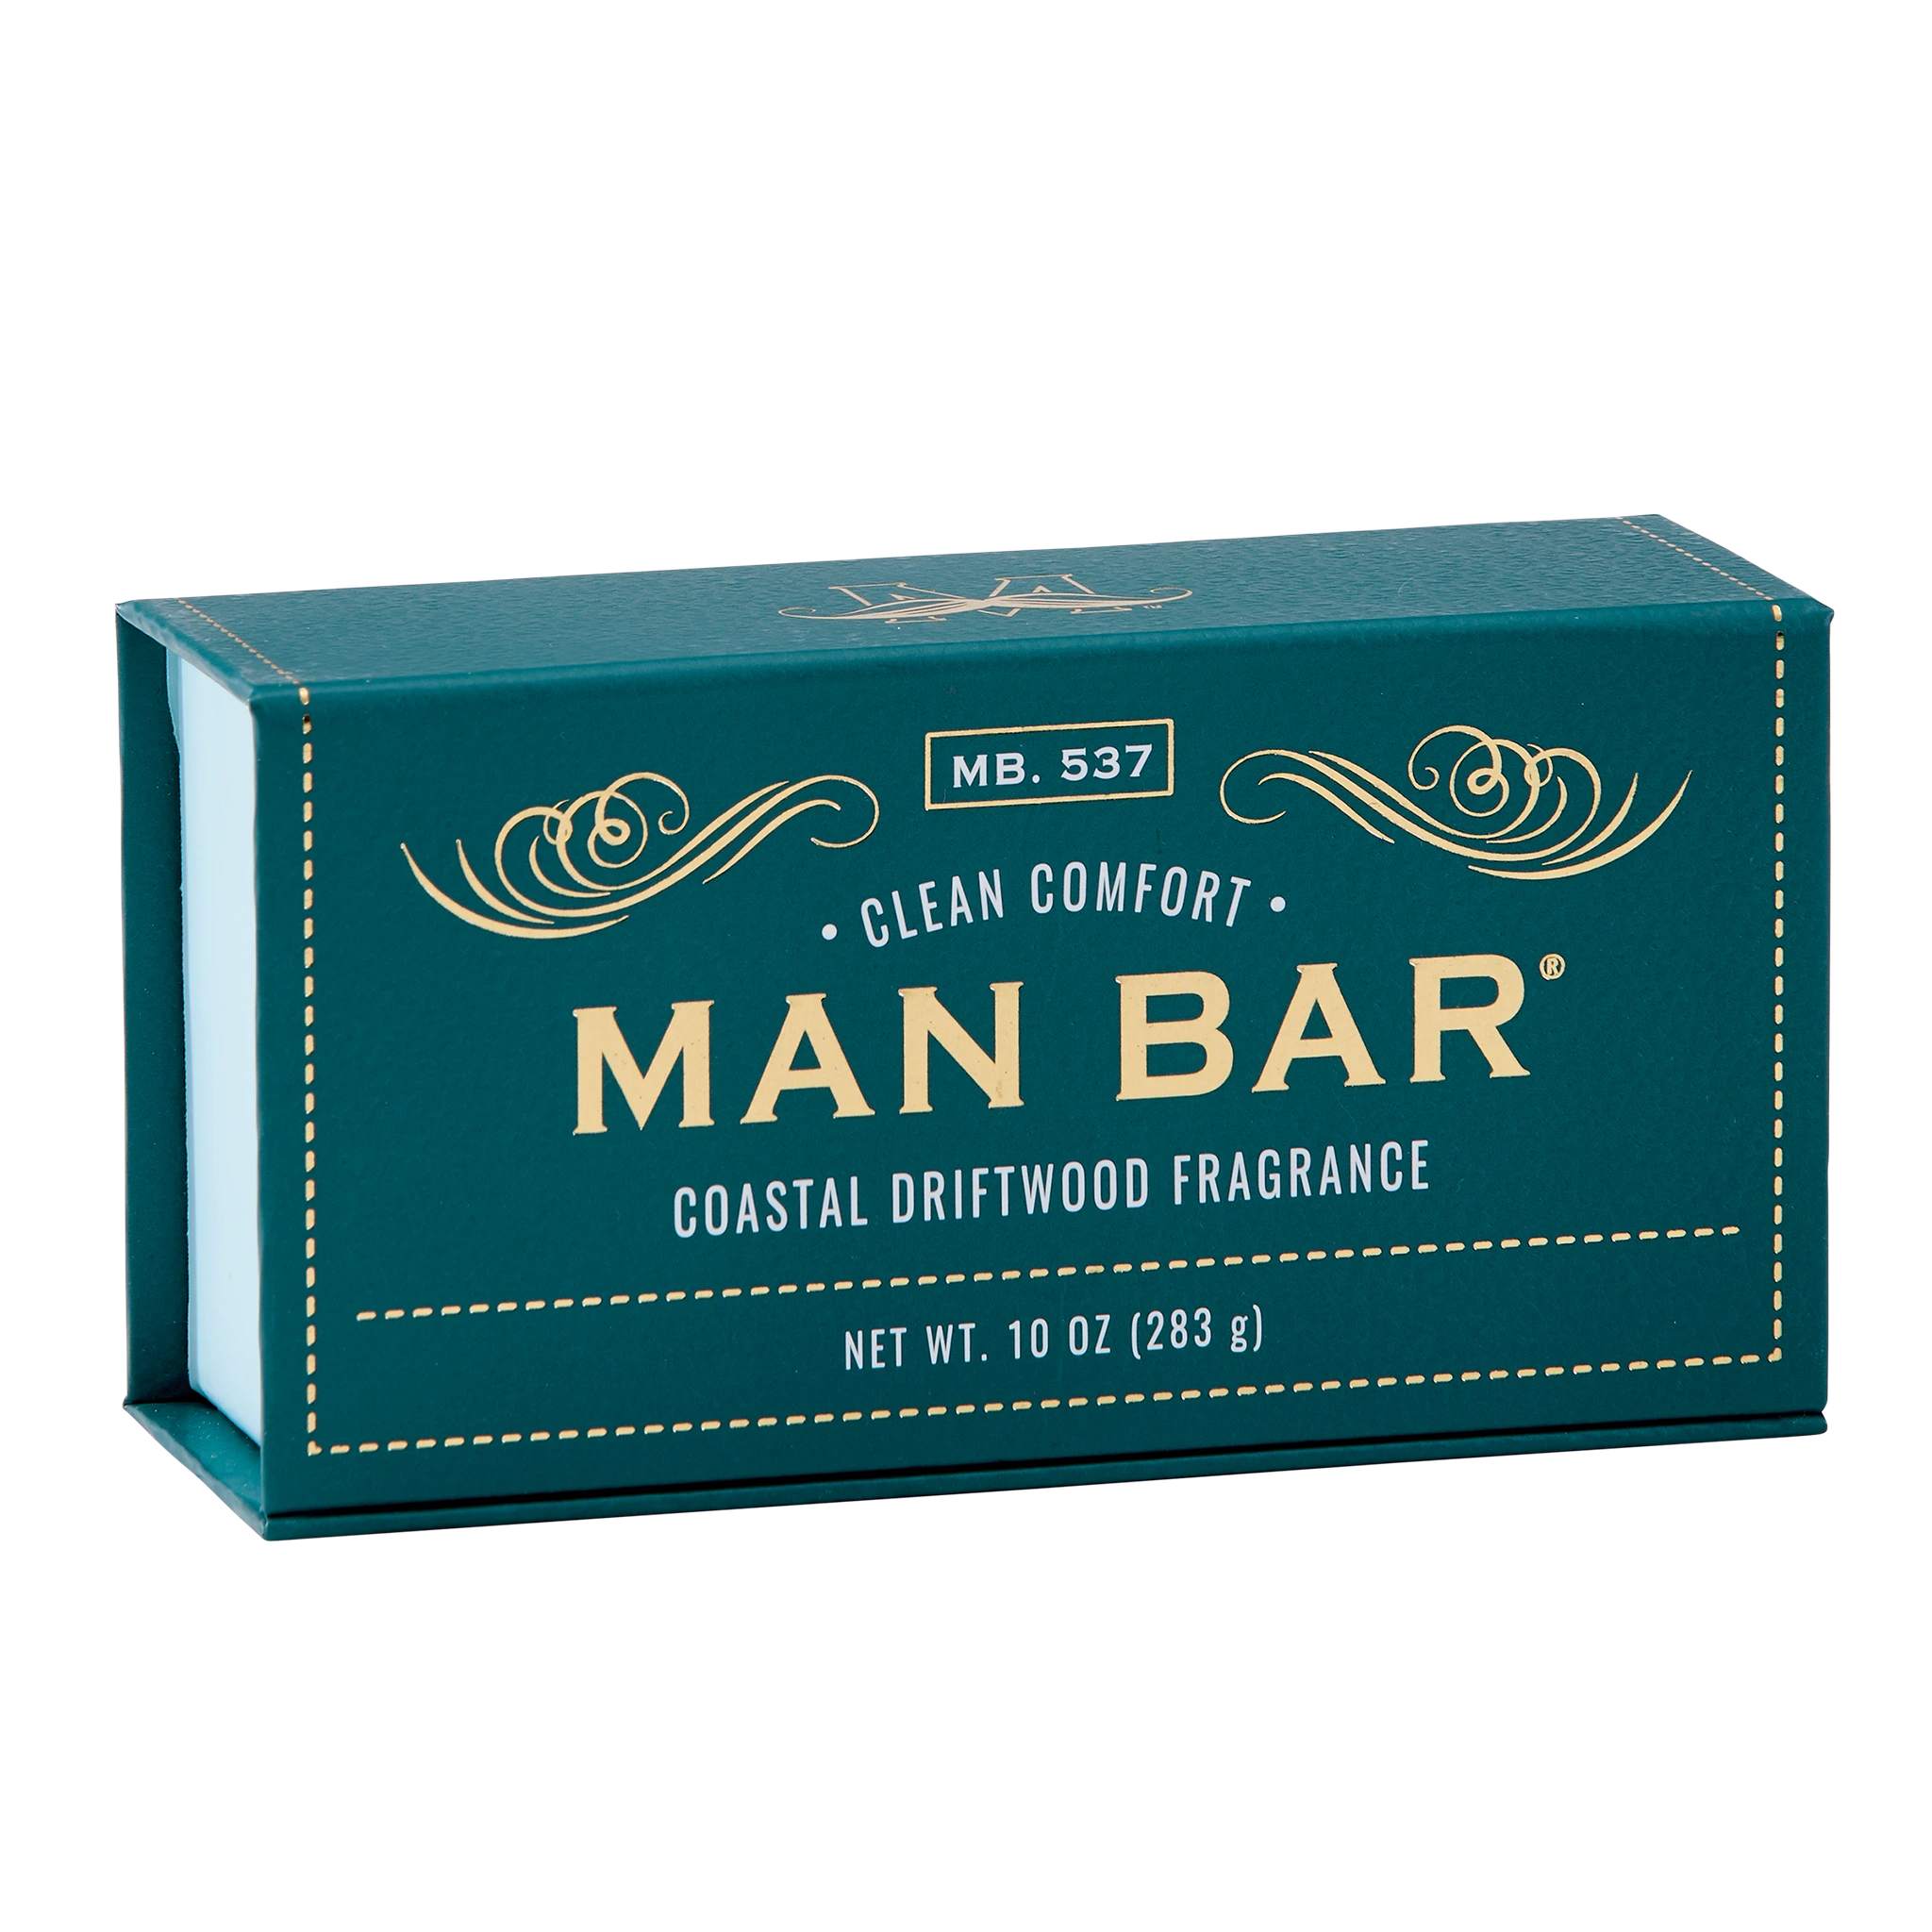 Man Bar Clean Comfort Coastal Driftwood soap box